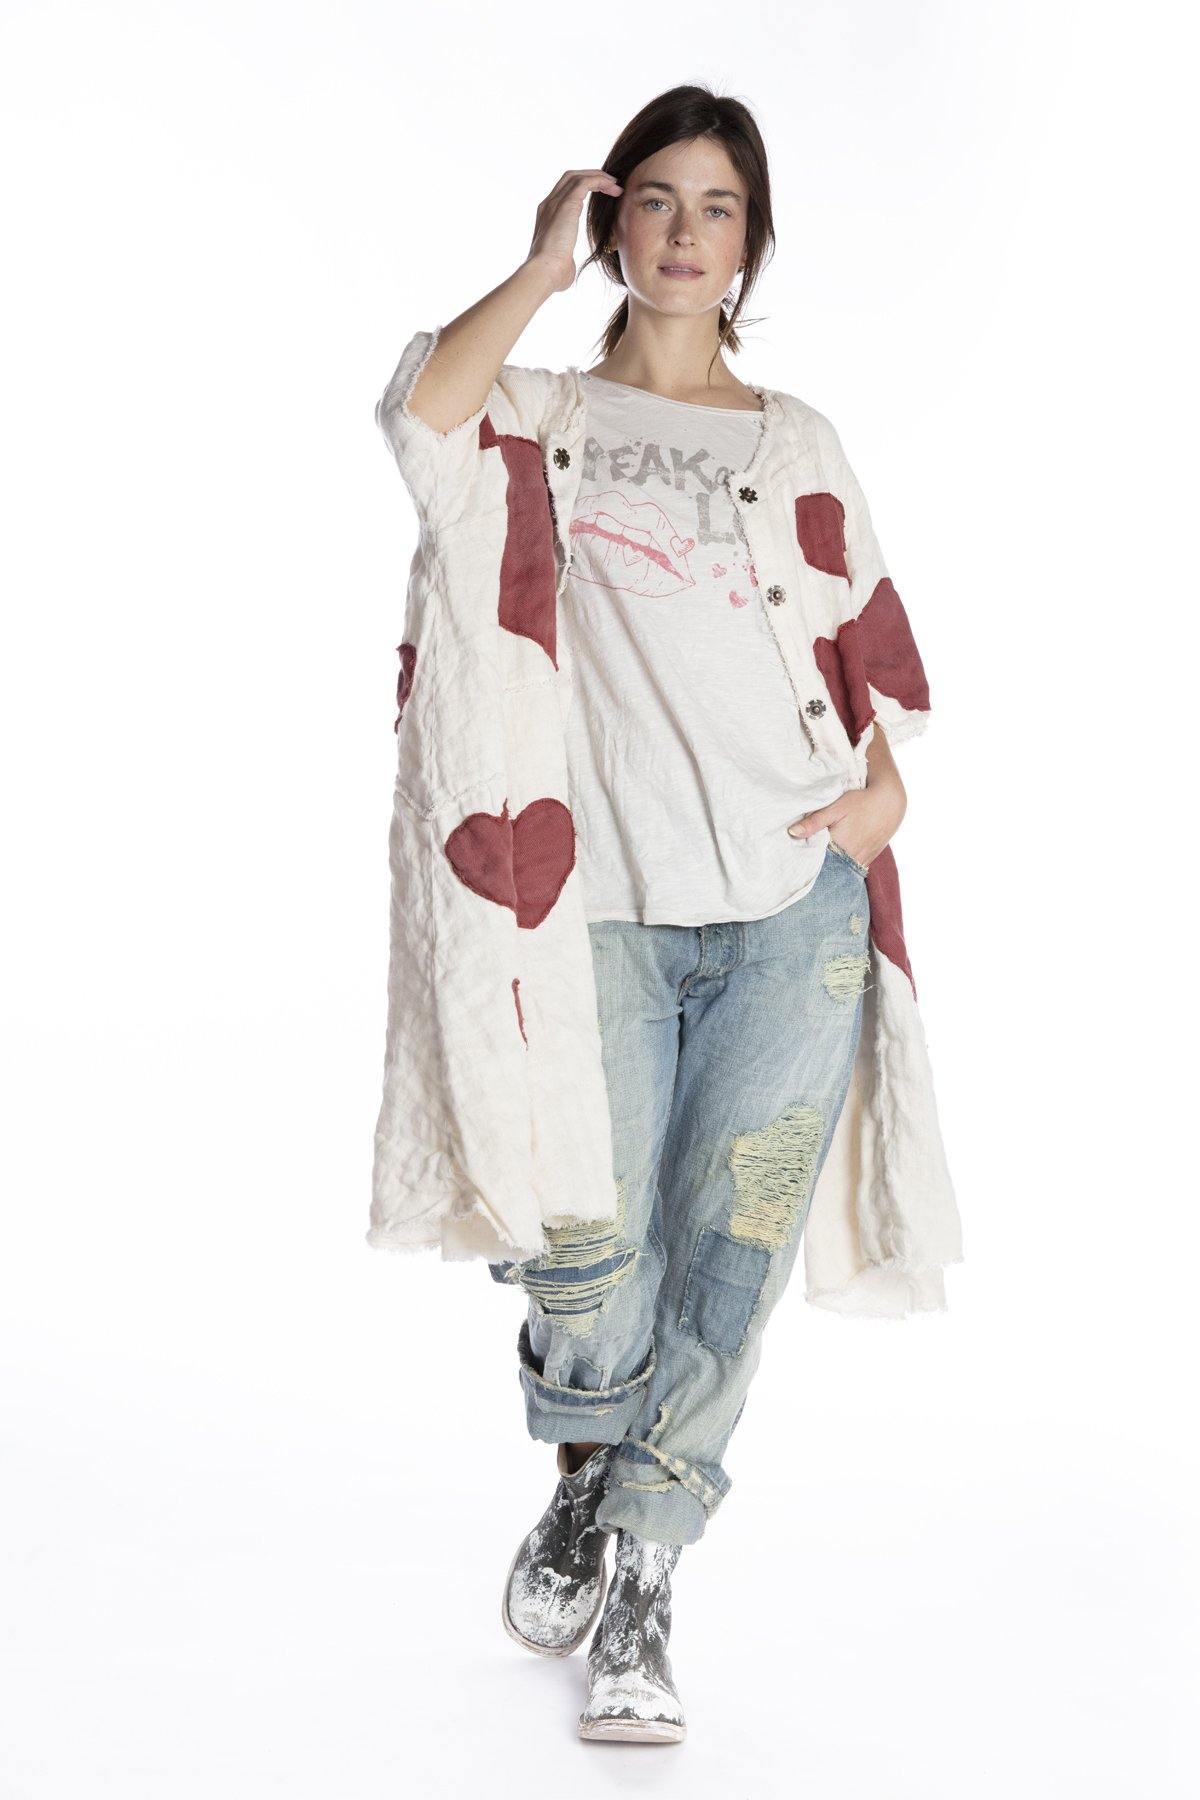 Magnolia Pearl Linen Heart Applique Kimi Koat Jacket 457